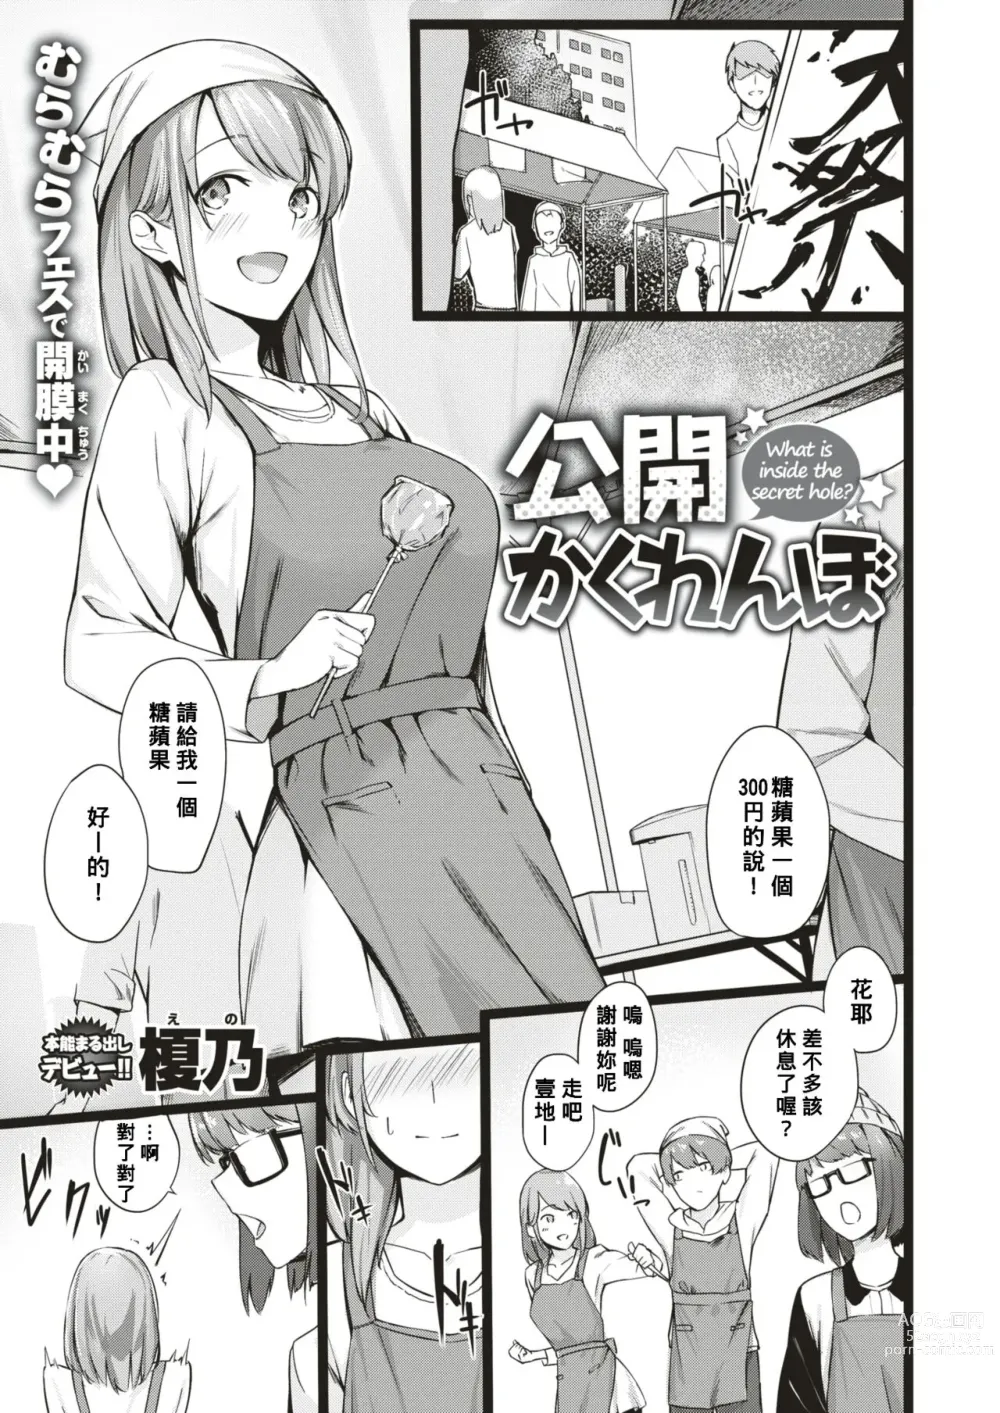 Page 1 of manga Koukai Kakurenbo - What is inside the secret hole?